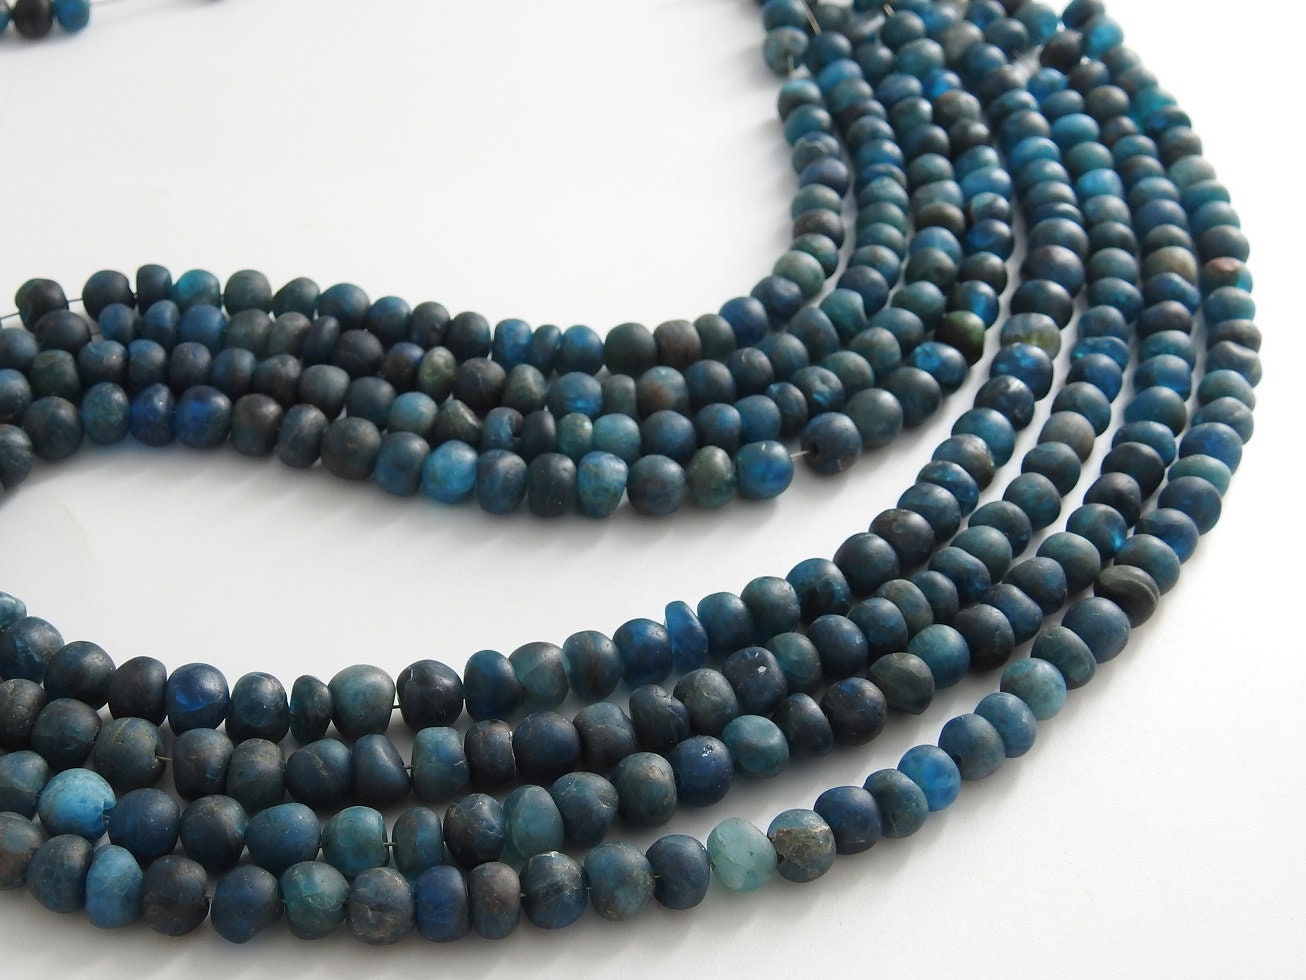 Neon Blue Apatite Roundel Bead,Smooth,Matte Polished,Handmade Gemstone,Loose Stone,Wholesaler Supplies,16Inch Strand,100%Natural | Save 33% - Rajasthan Living 18